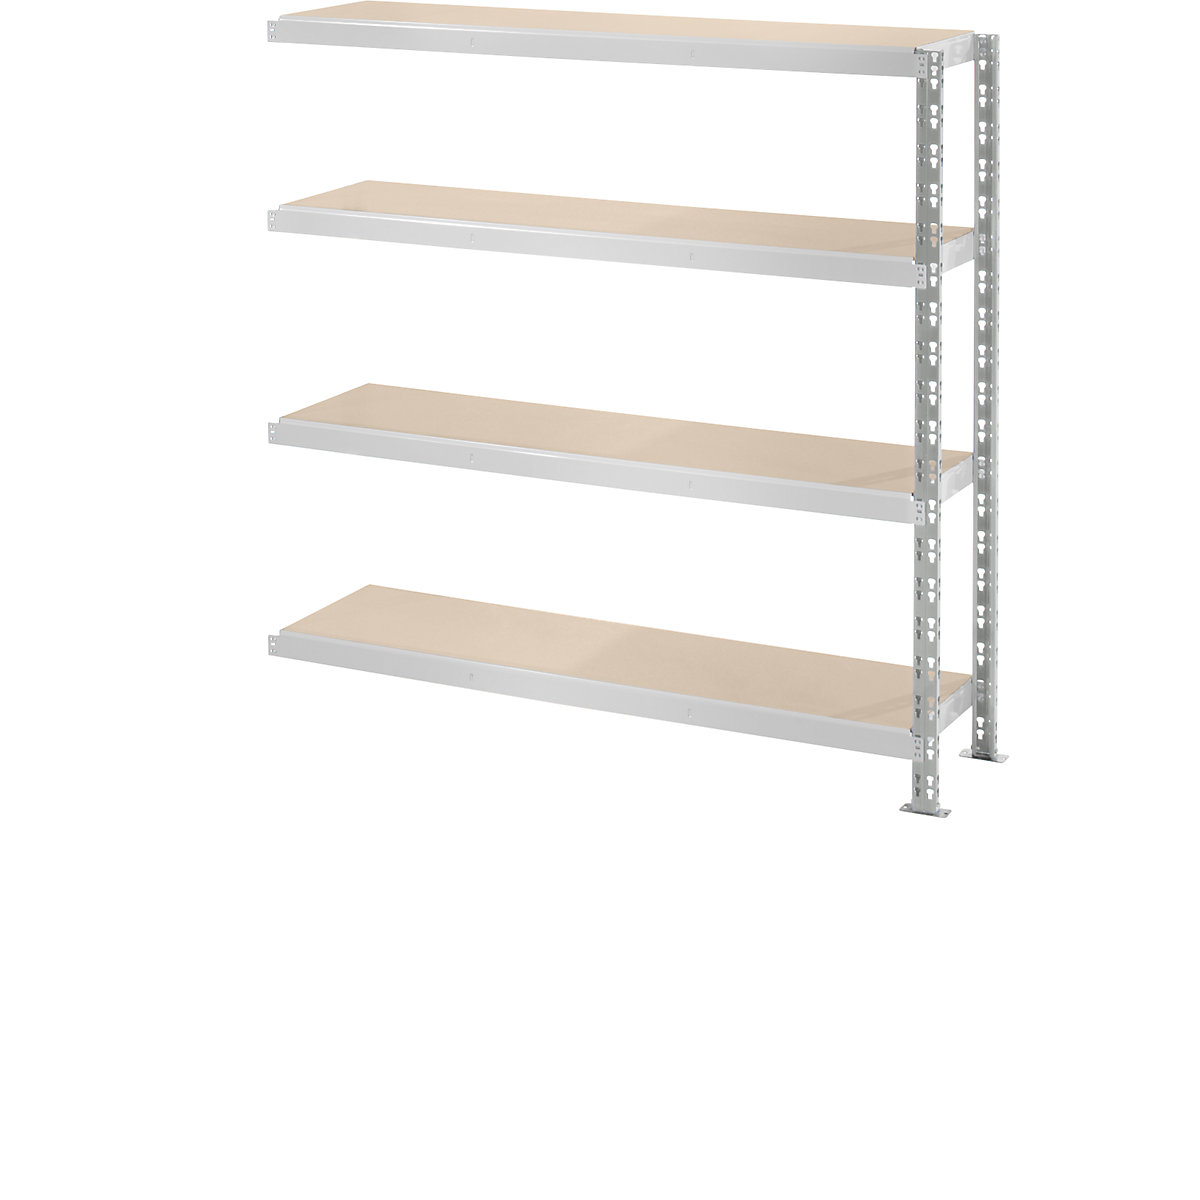 Wide span boltless shelf unit with moulded chipboard shelves, depth 500 mm, extension shelf unit, HxW 1508 x 1525 mm